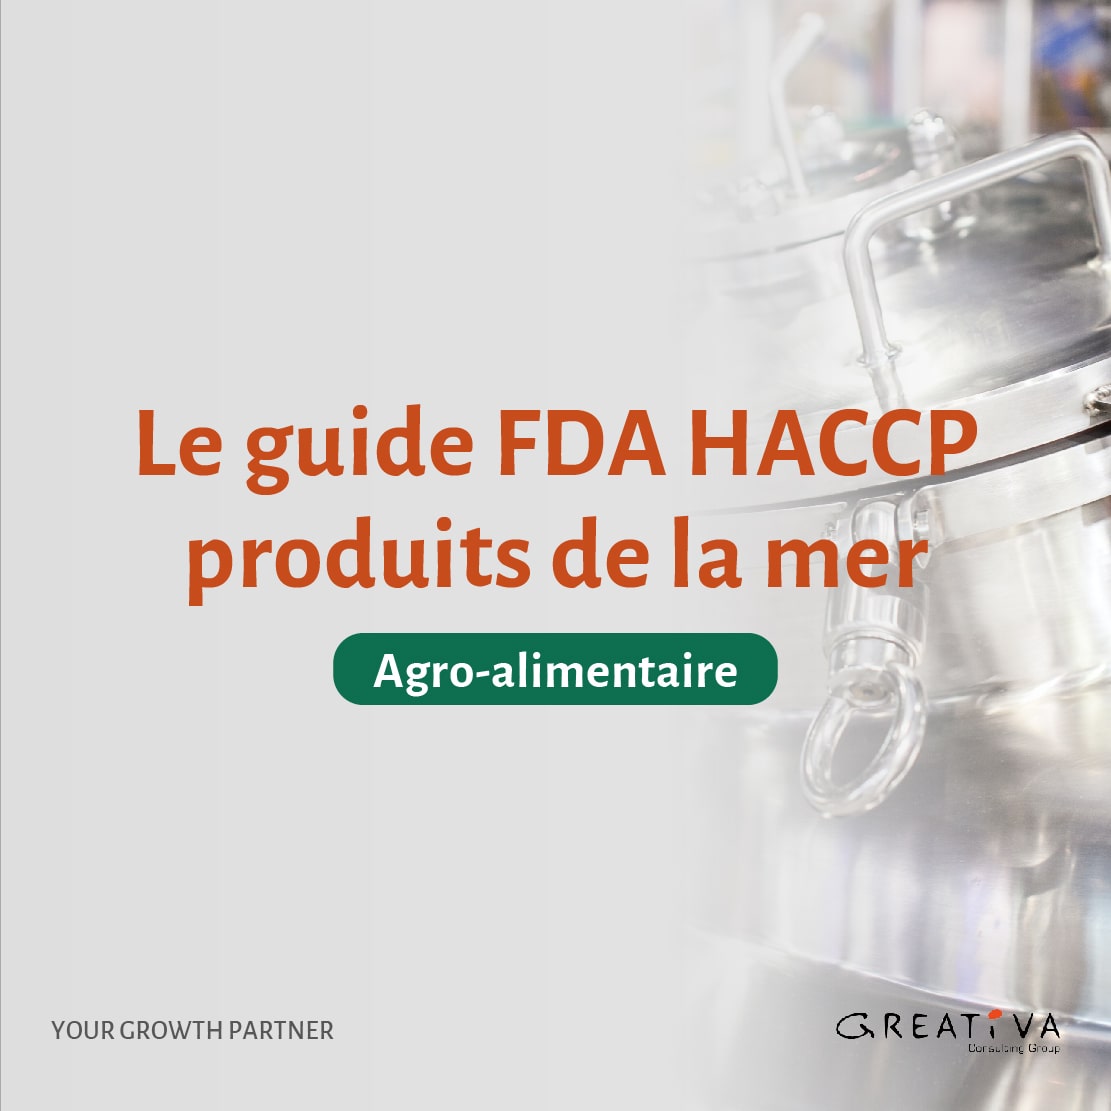 Le guide FDA HACCP produits de la mer